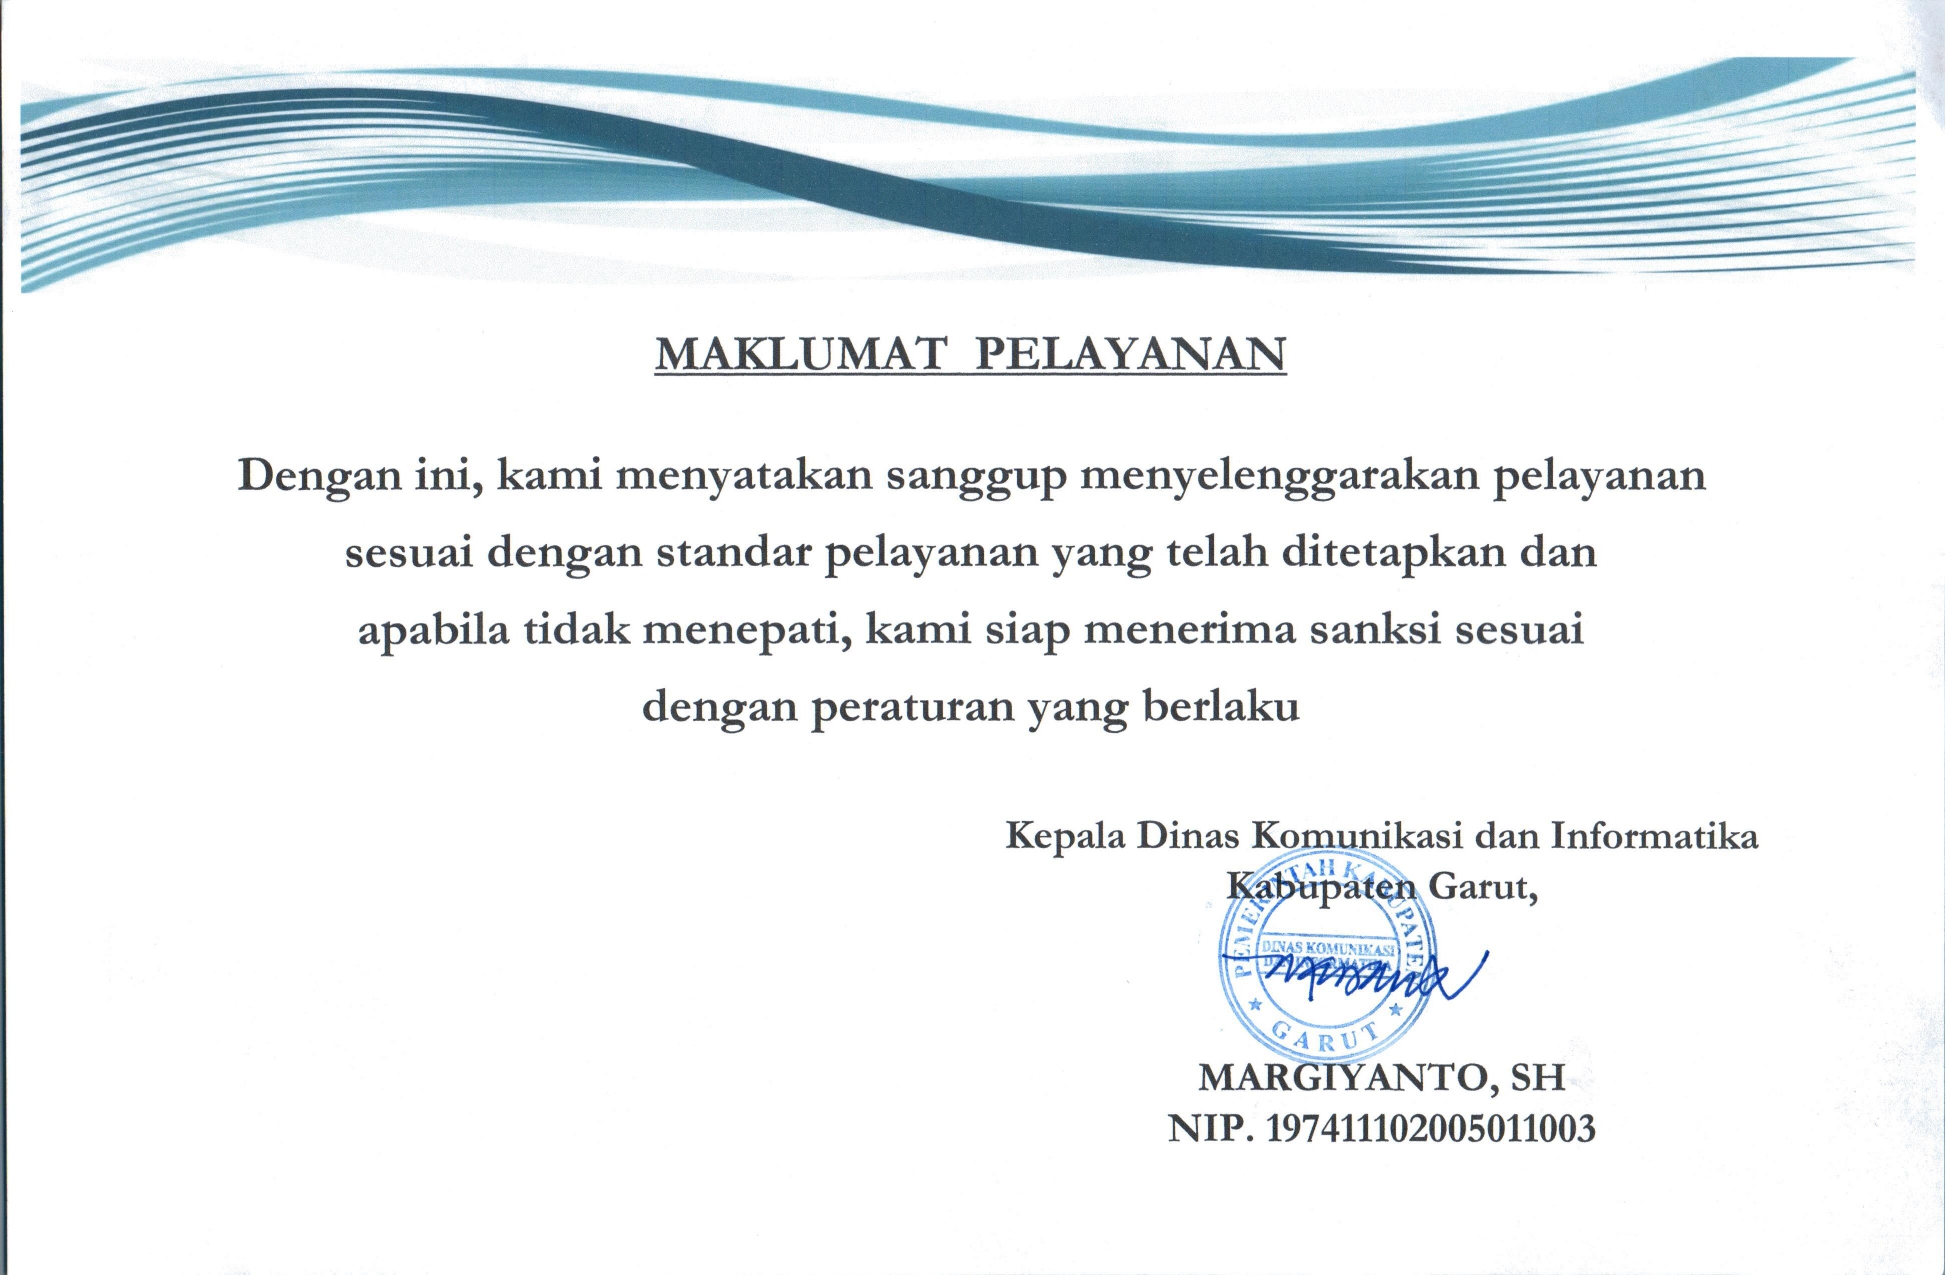 Maklumat Pelayanan Dinas Komunikasi dan Informatika Kabupaten Garut